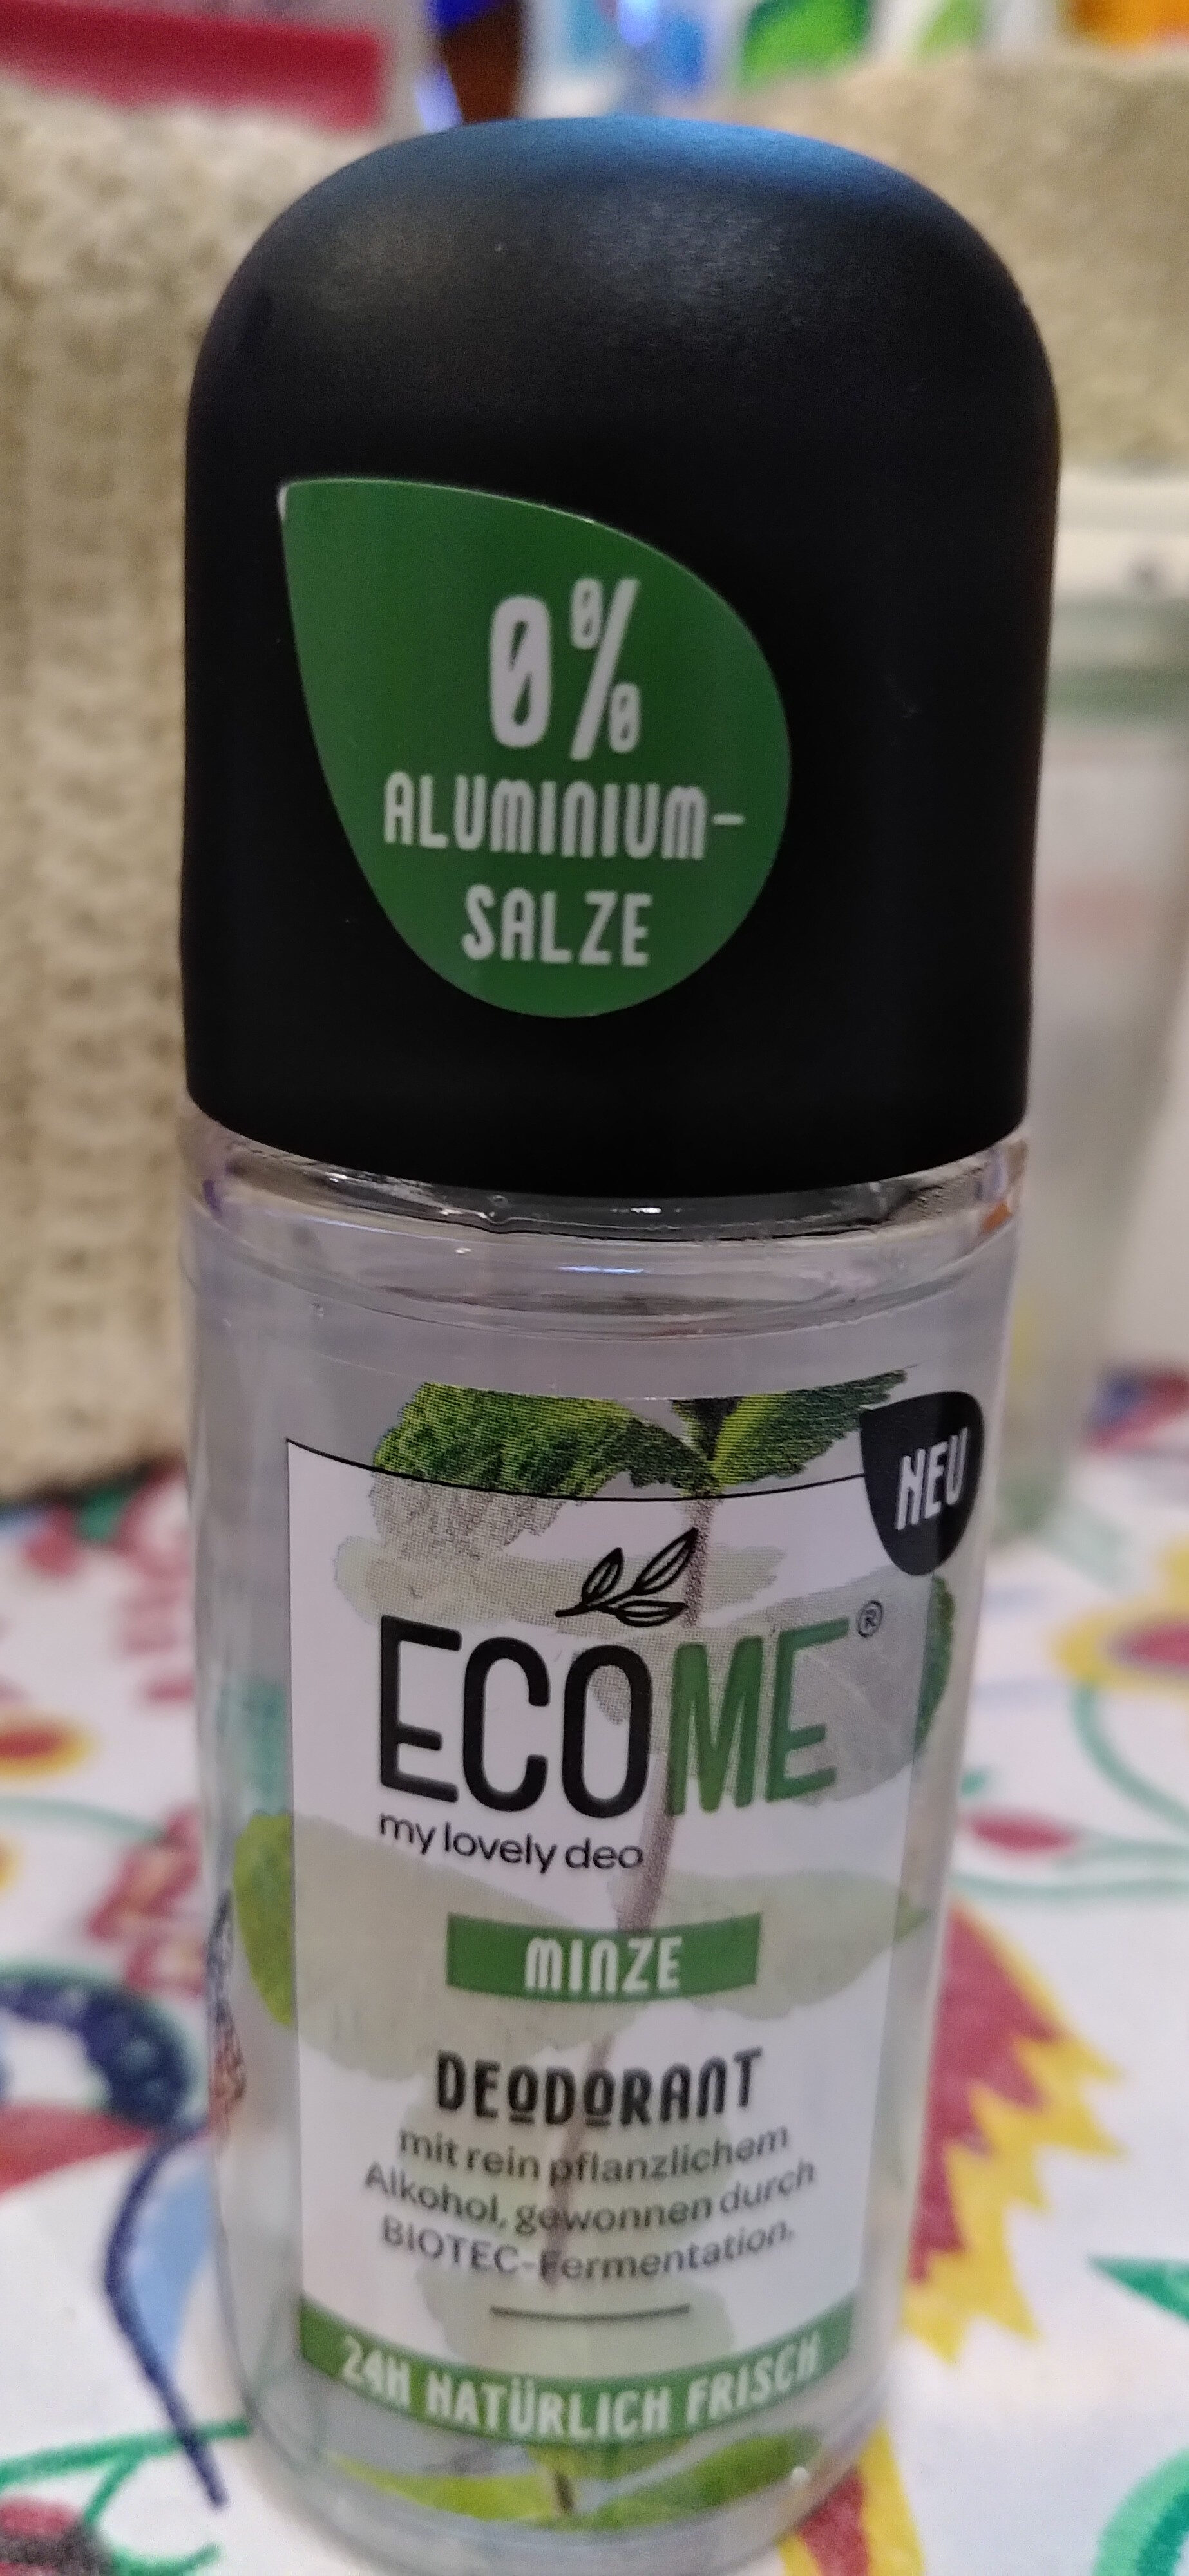 ECOME Deodorant - Produkt - de